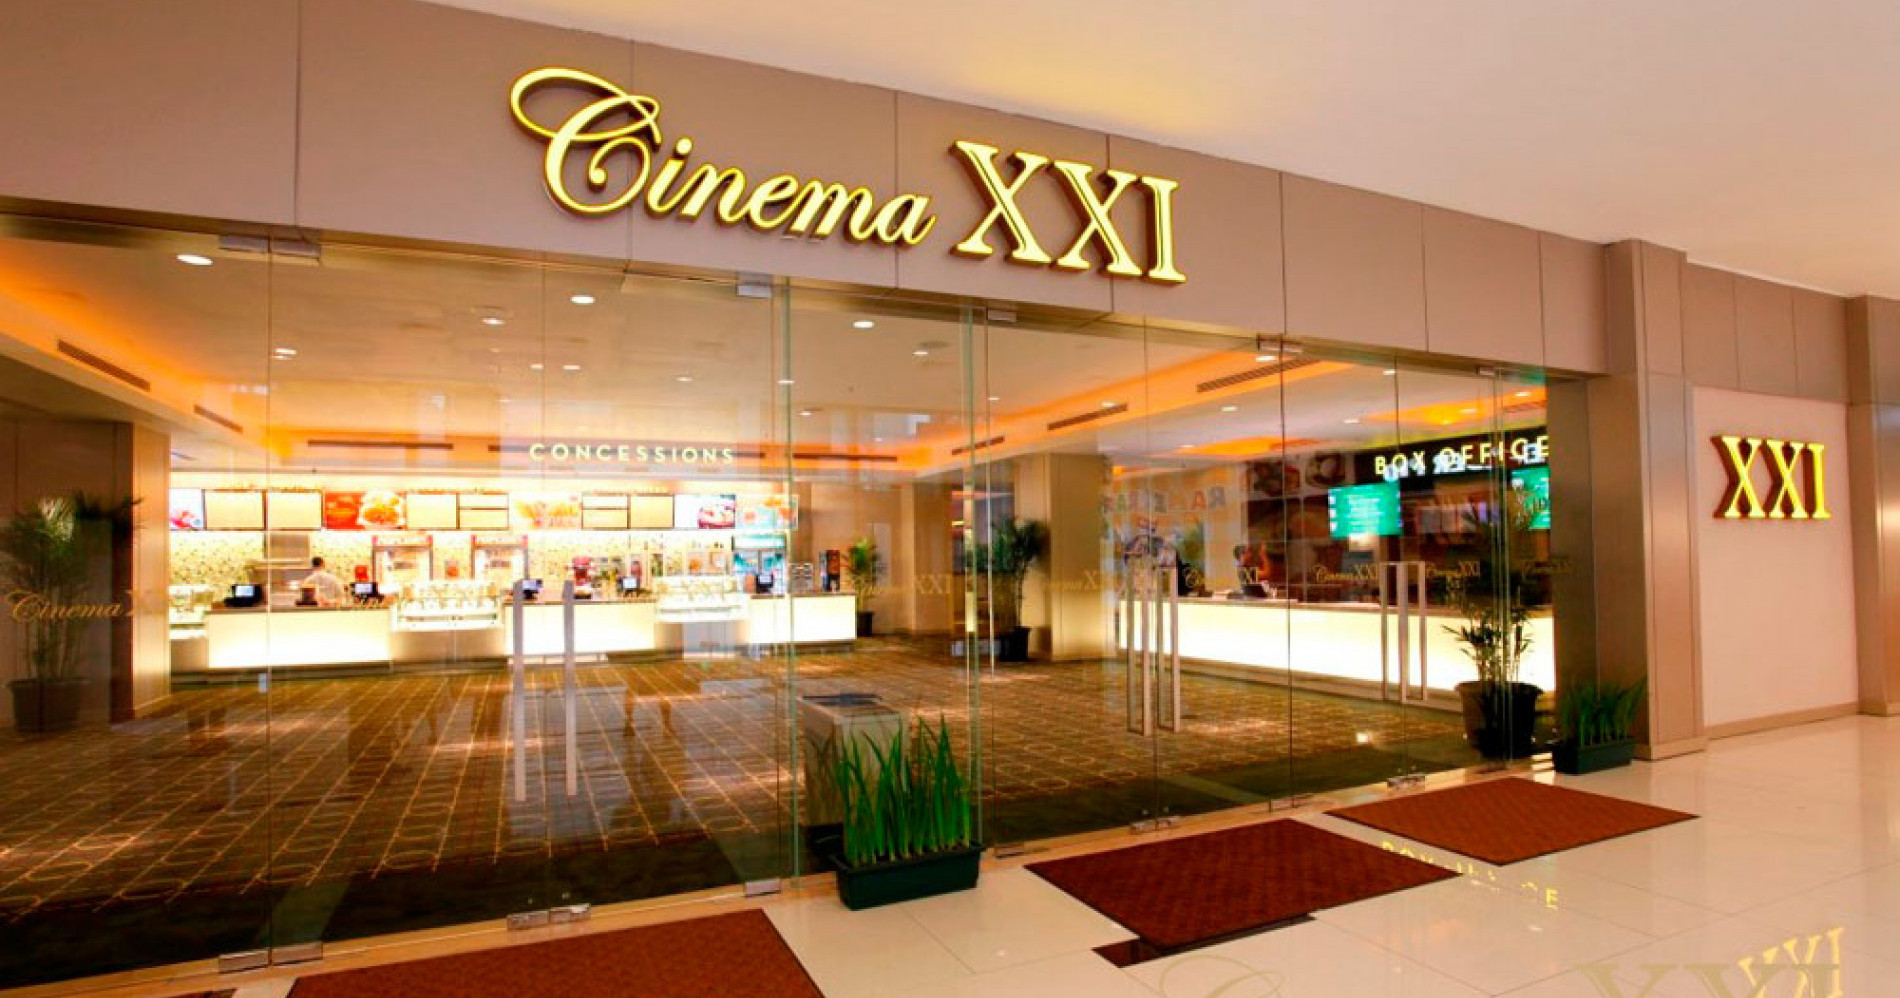 Pengelola bioskop Cinema XXI IPO, incar dana segar hingga Rp2,4 triliun untuk ekspansi (Sumber Gambar: 21cineplex)